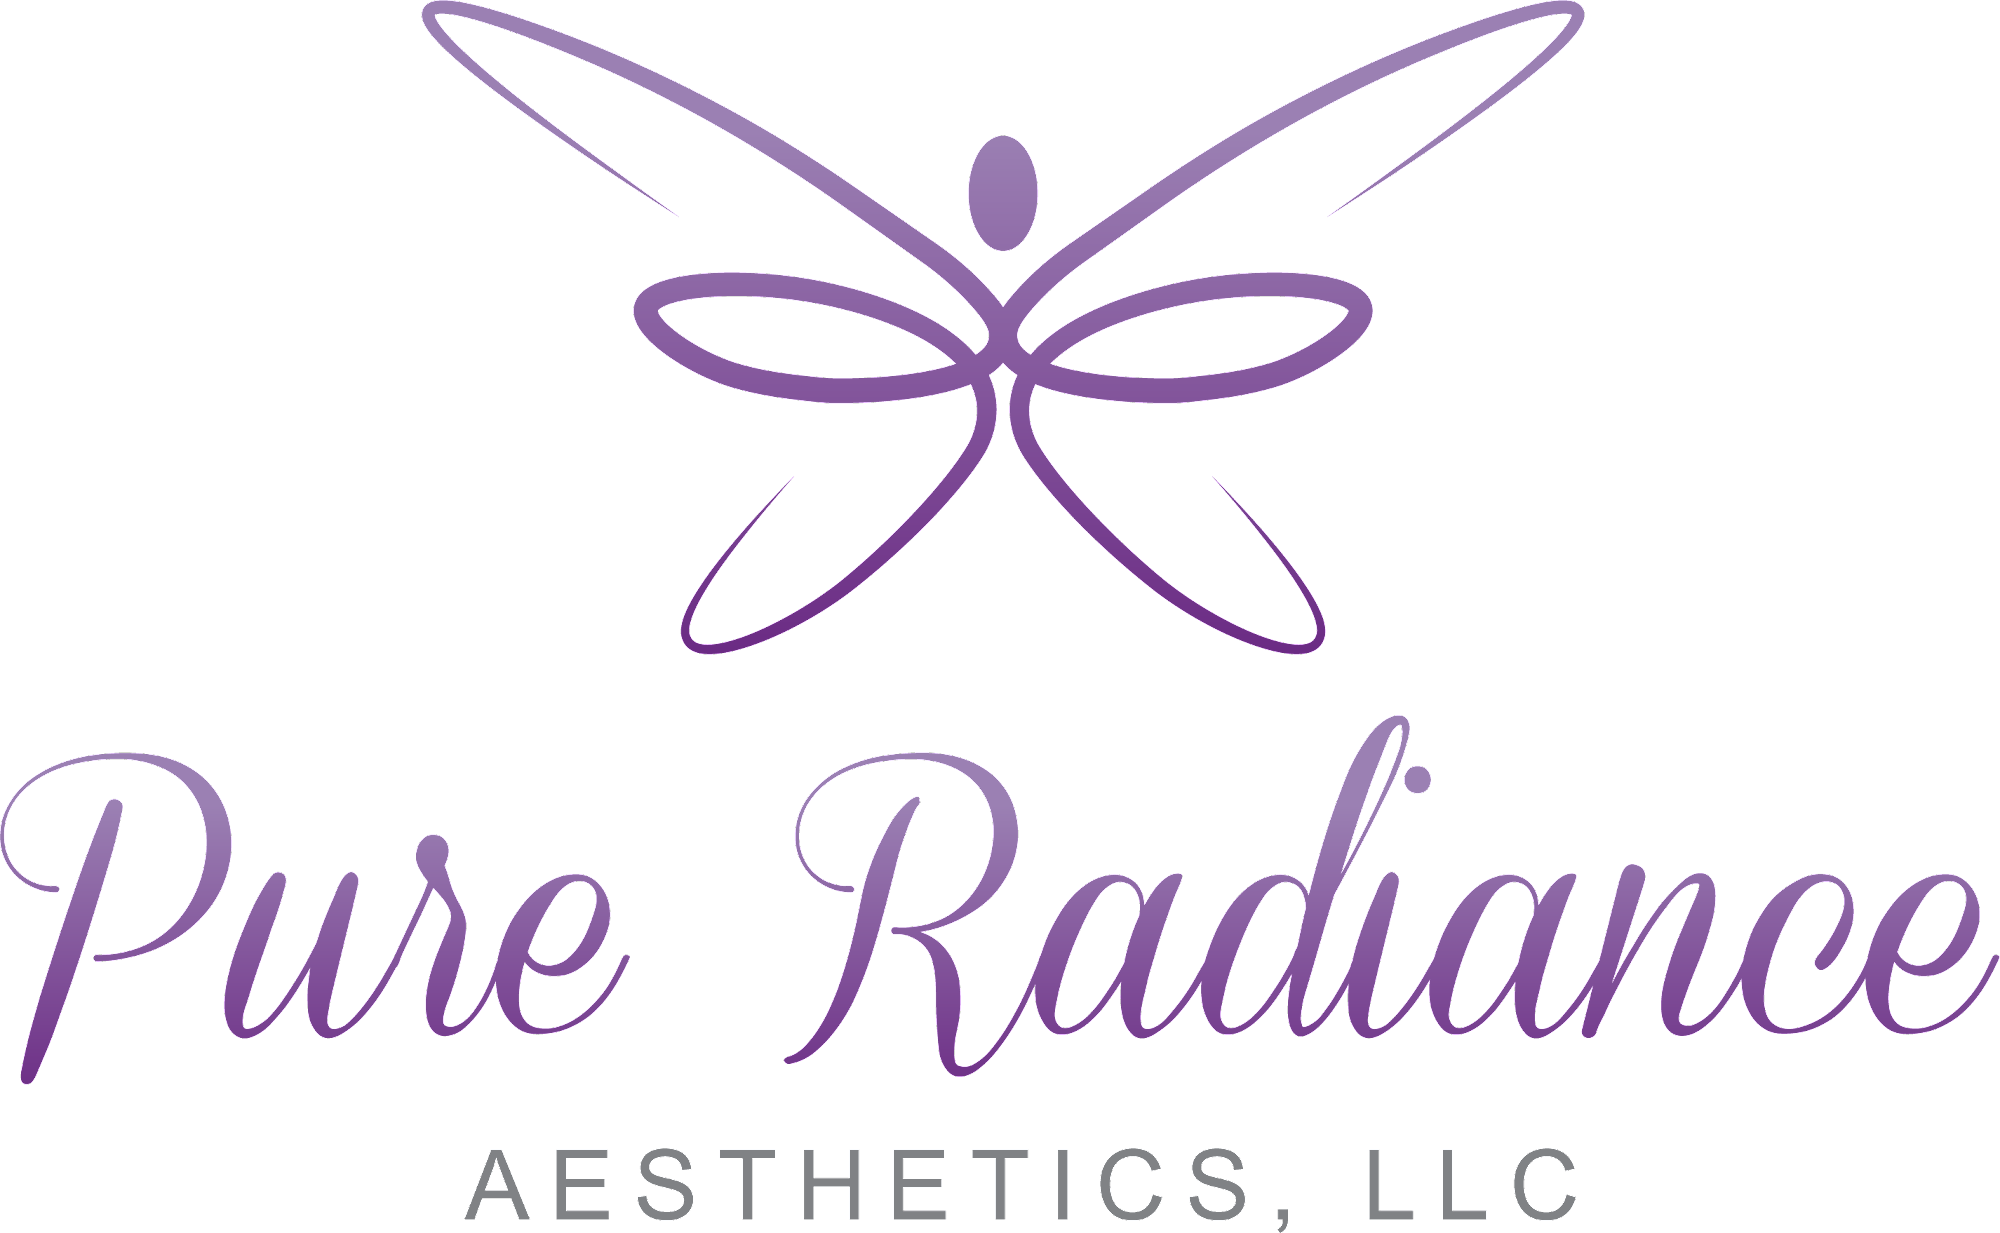 Pure Radiance Aesthetics, LLC